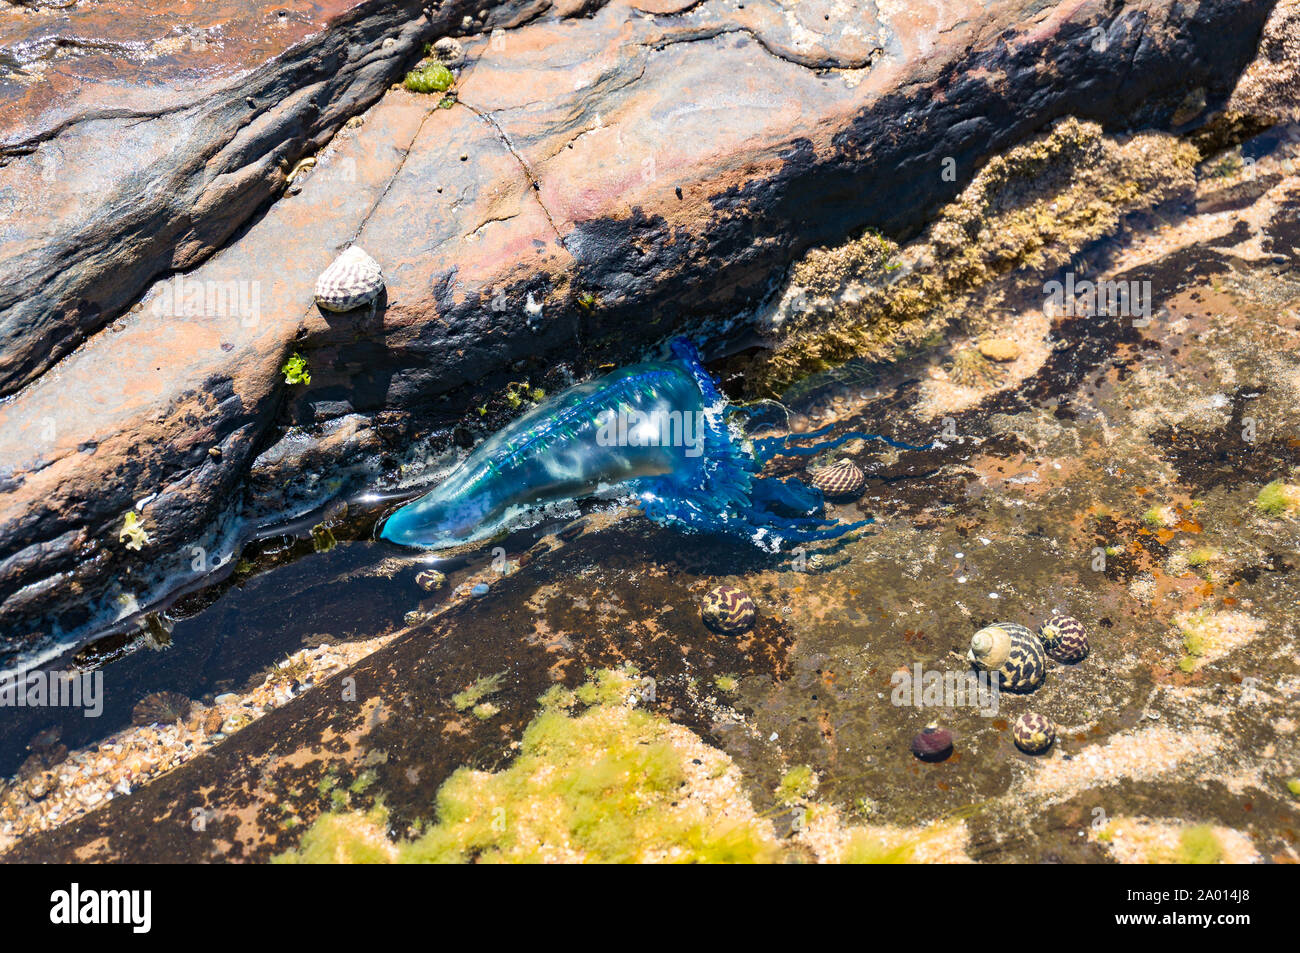 Botella Azul, hombre portugués de la guerra o el terror flotante medusas en el agua Foto de stock